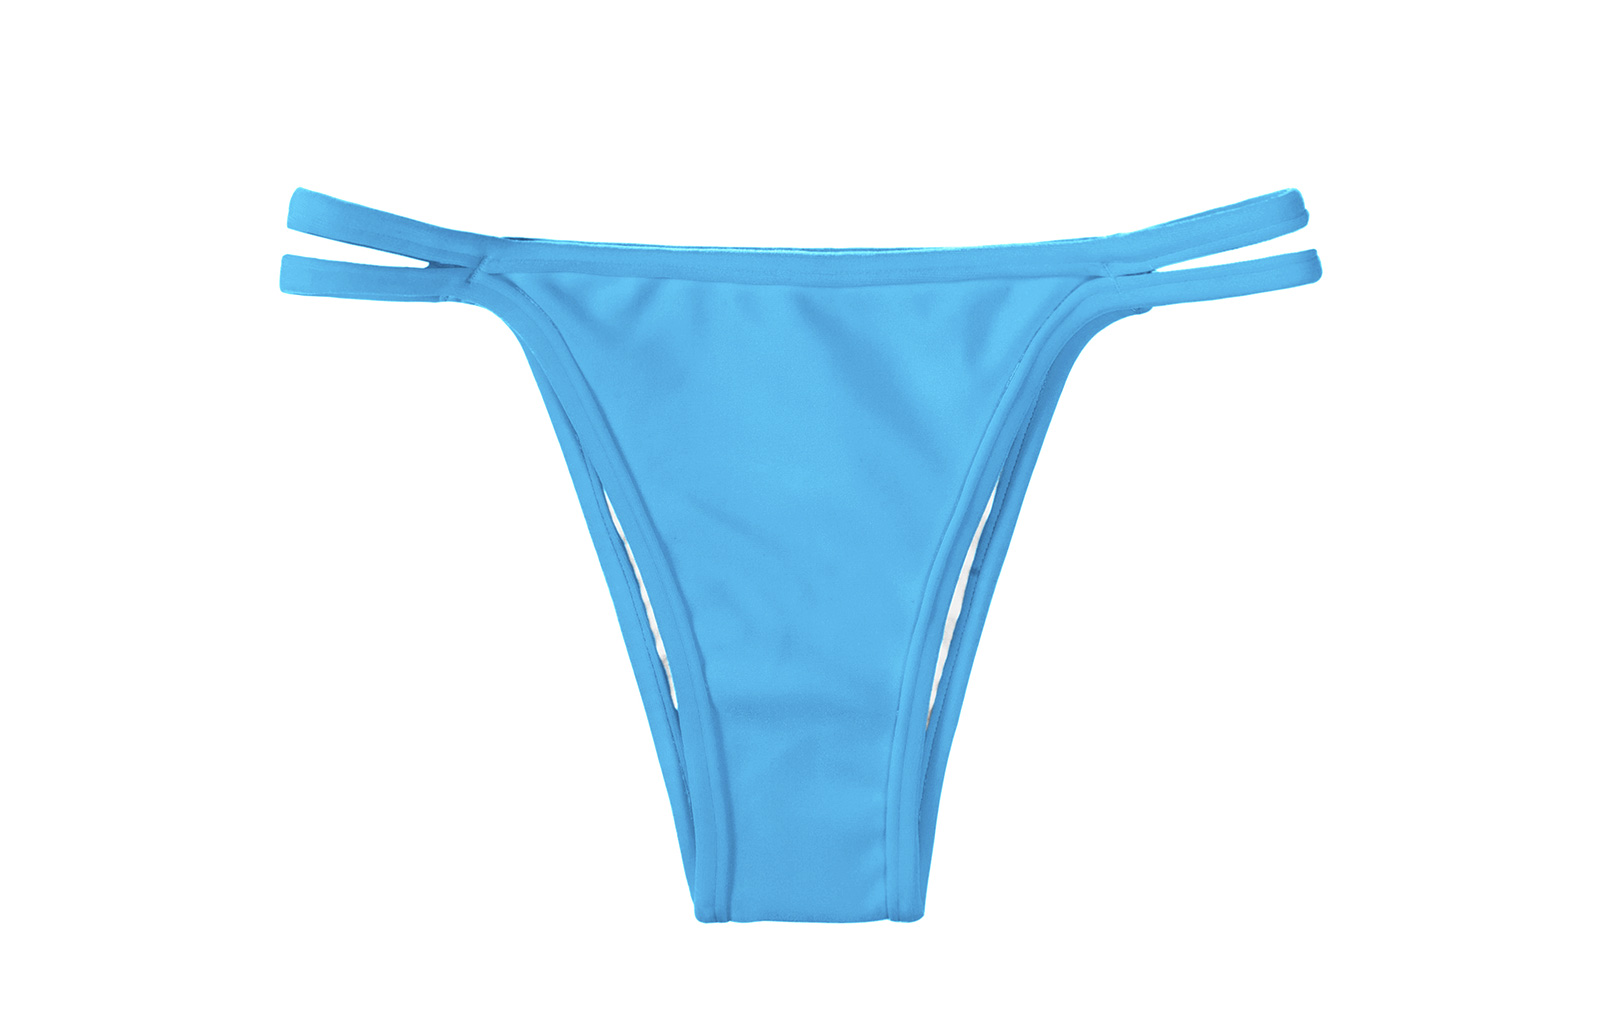 Bikini Bottoms Brazilian Bottom - Calcinha Blue Duo - Brand Rio de Sol